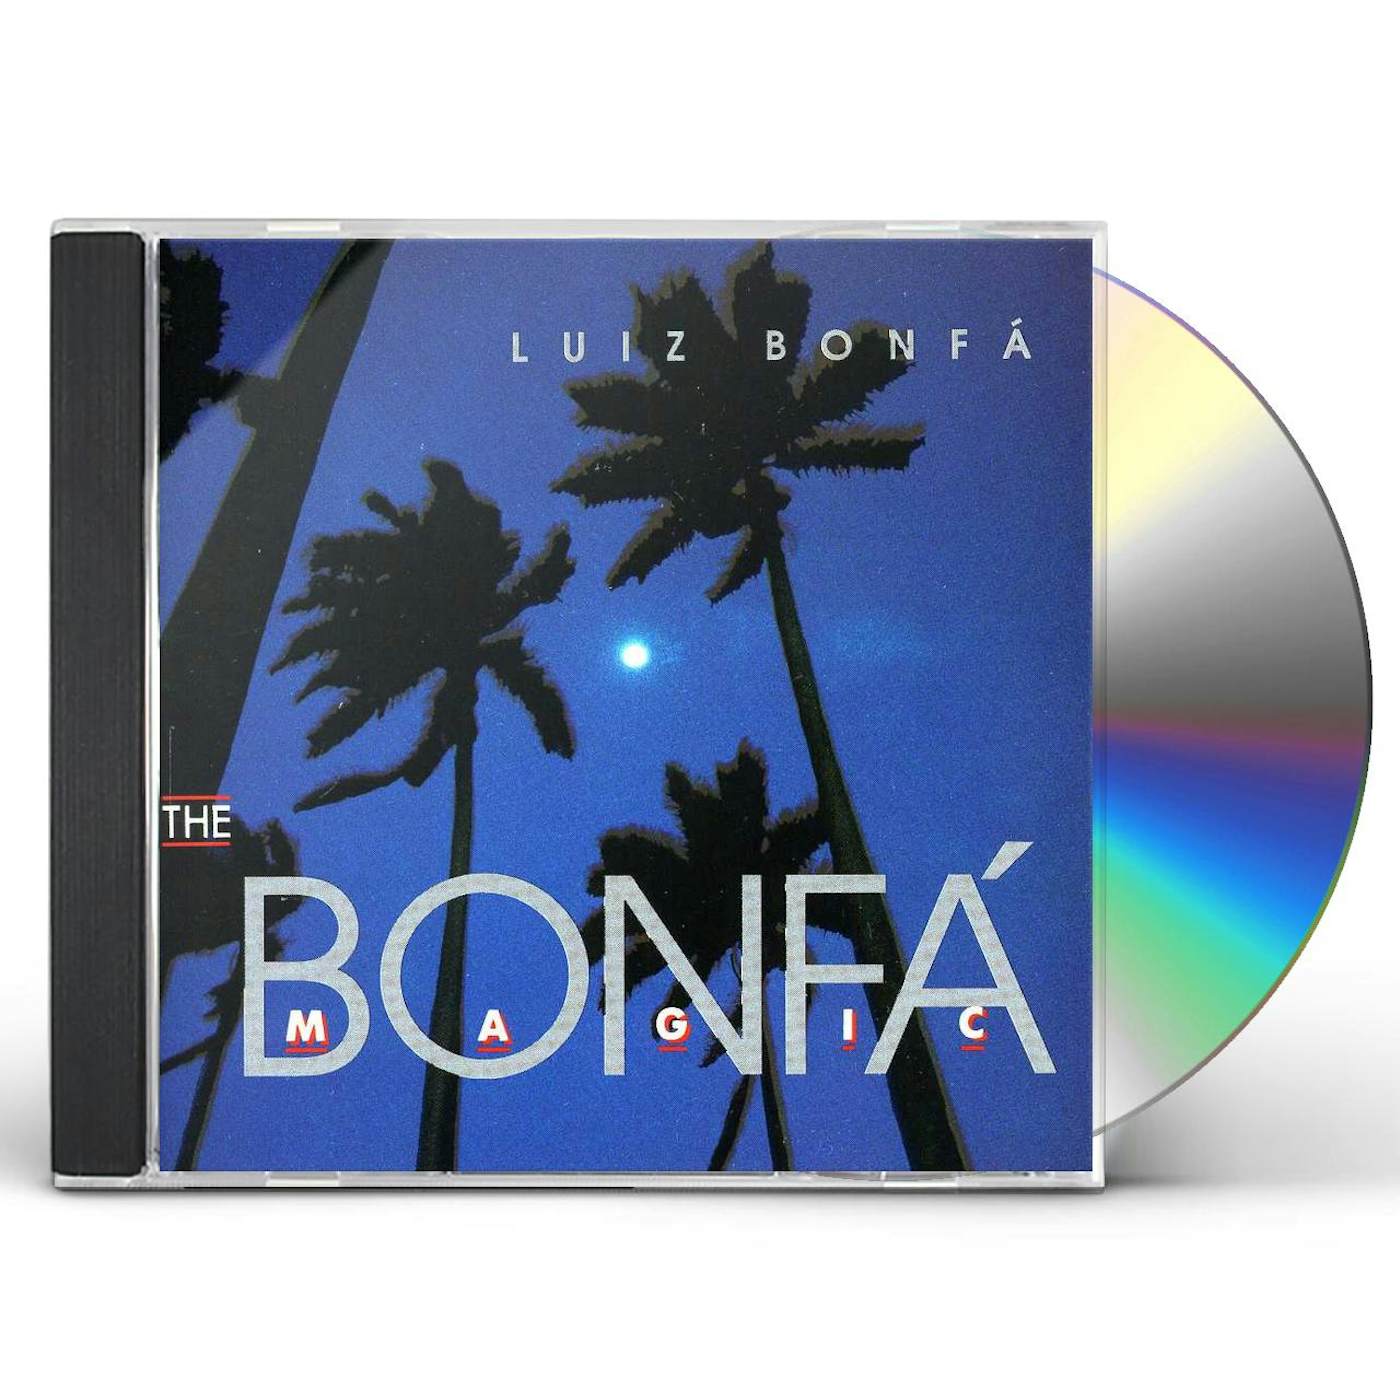 Luiz Bonfá BONFA MAGIC CD